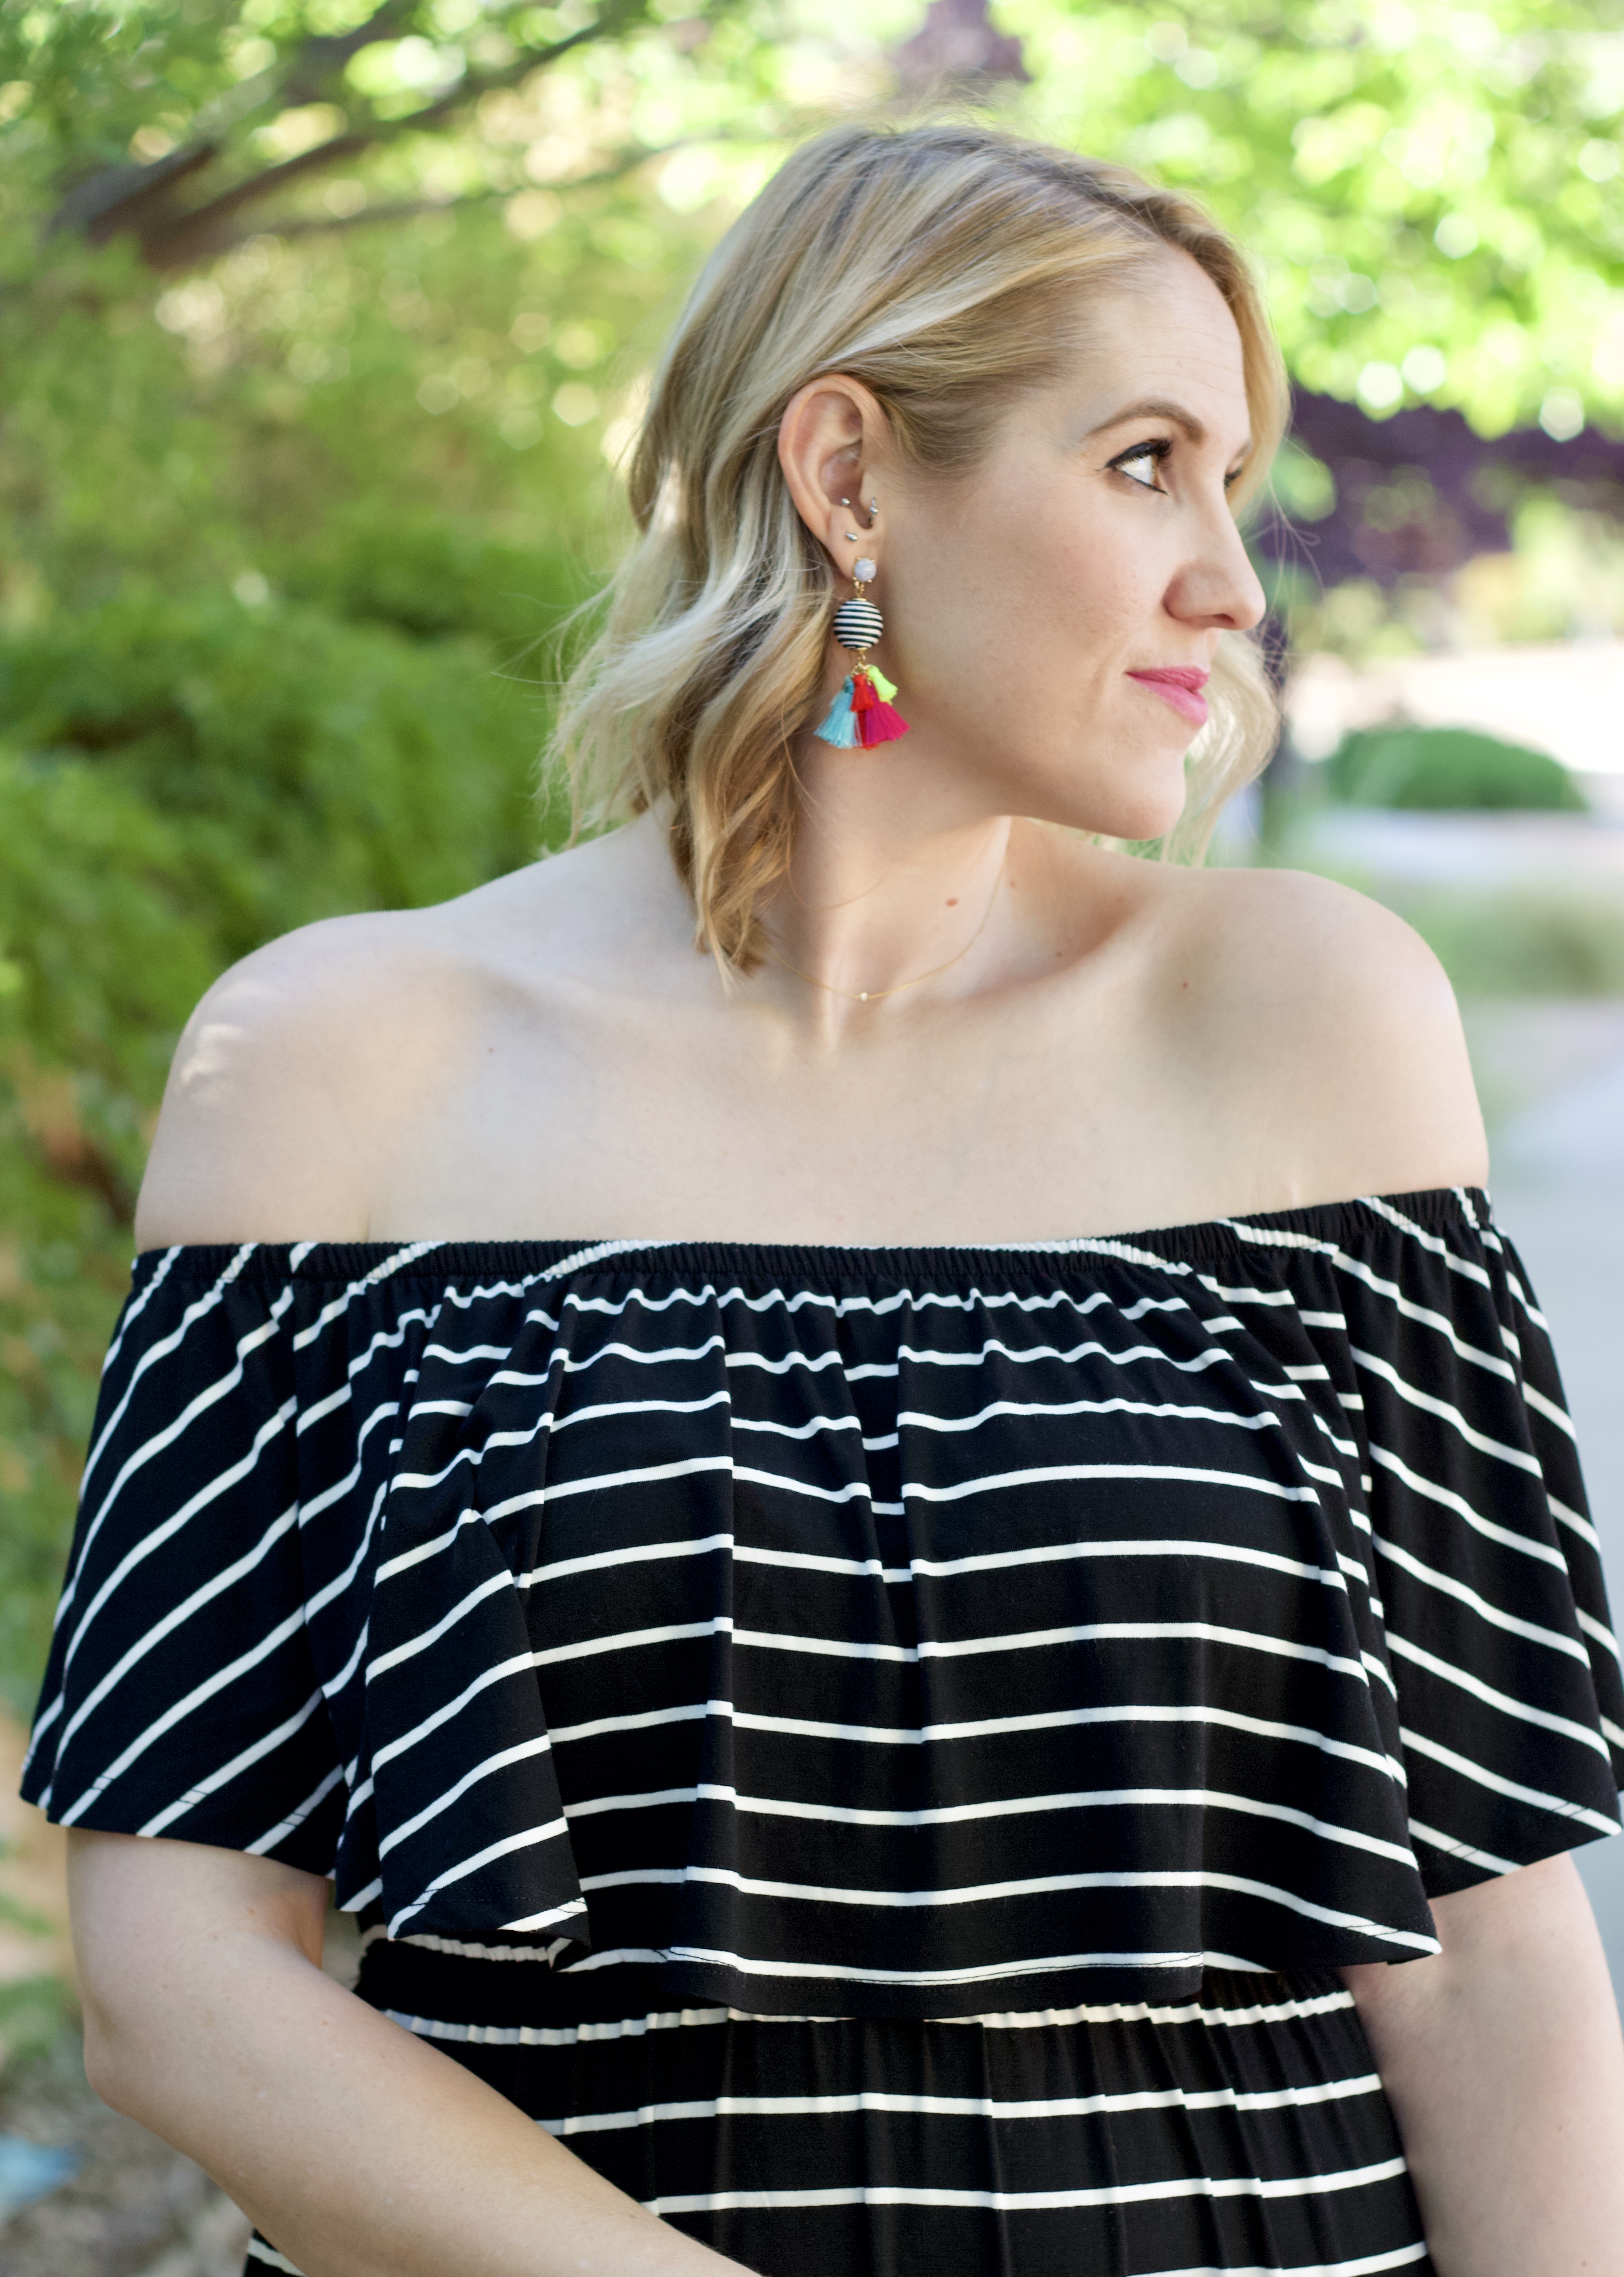 off the shoulder striped maxi dress for summer #offtheshoulder #maxidress #styleblogger #fashion